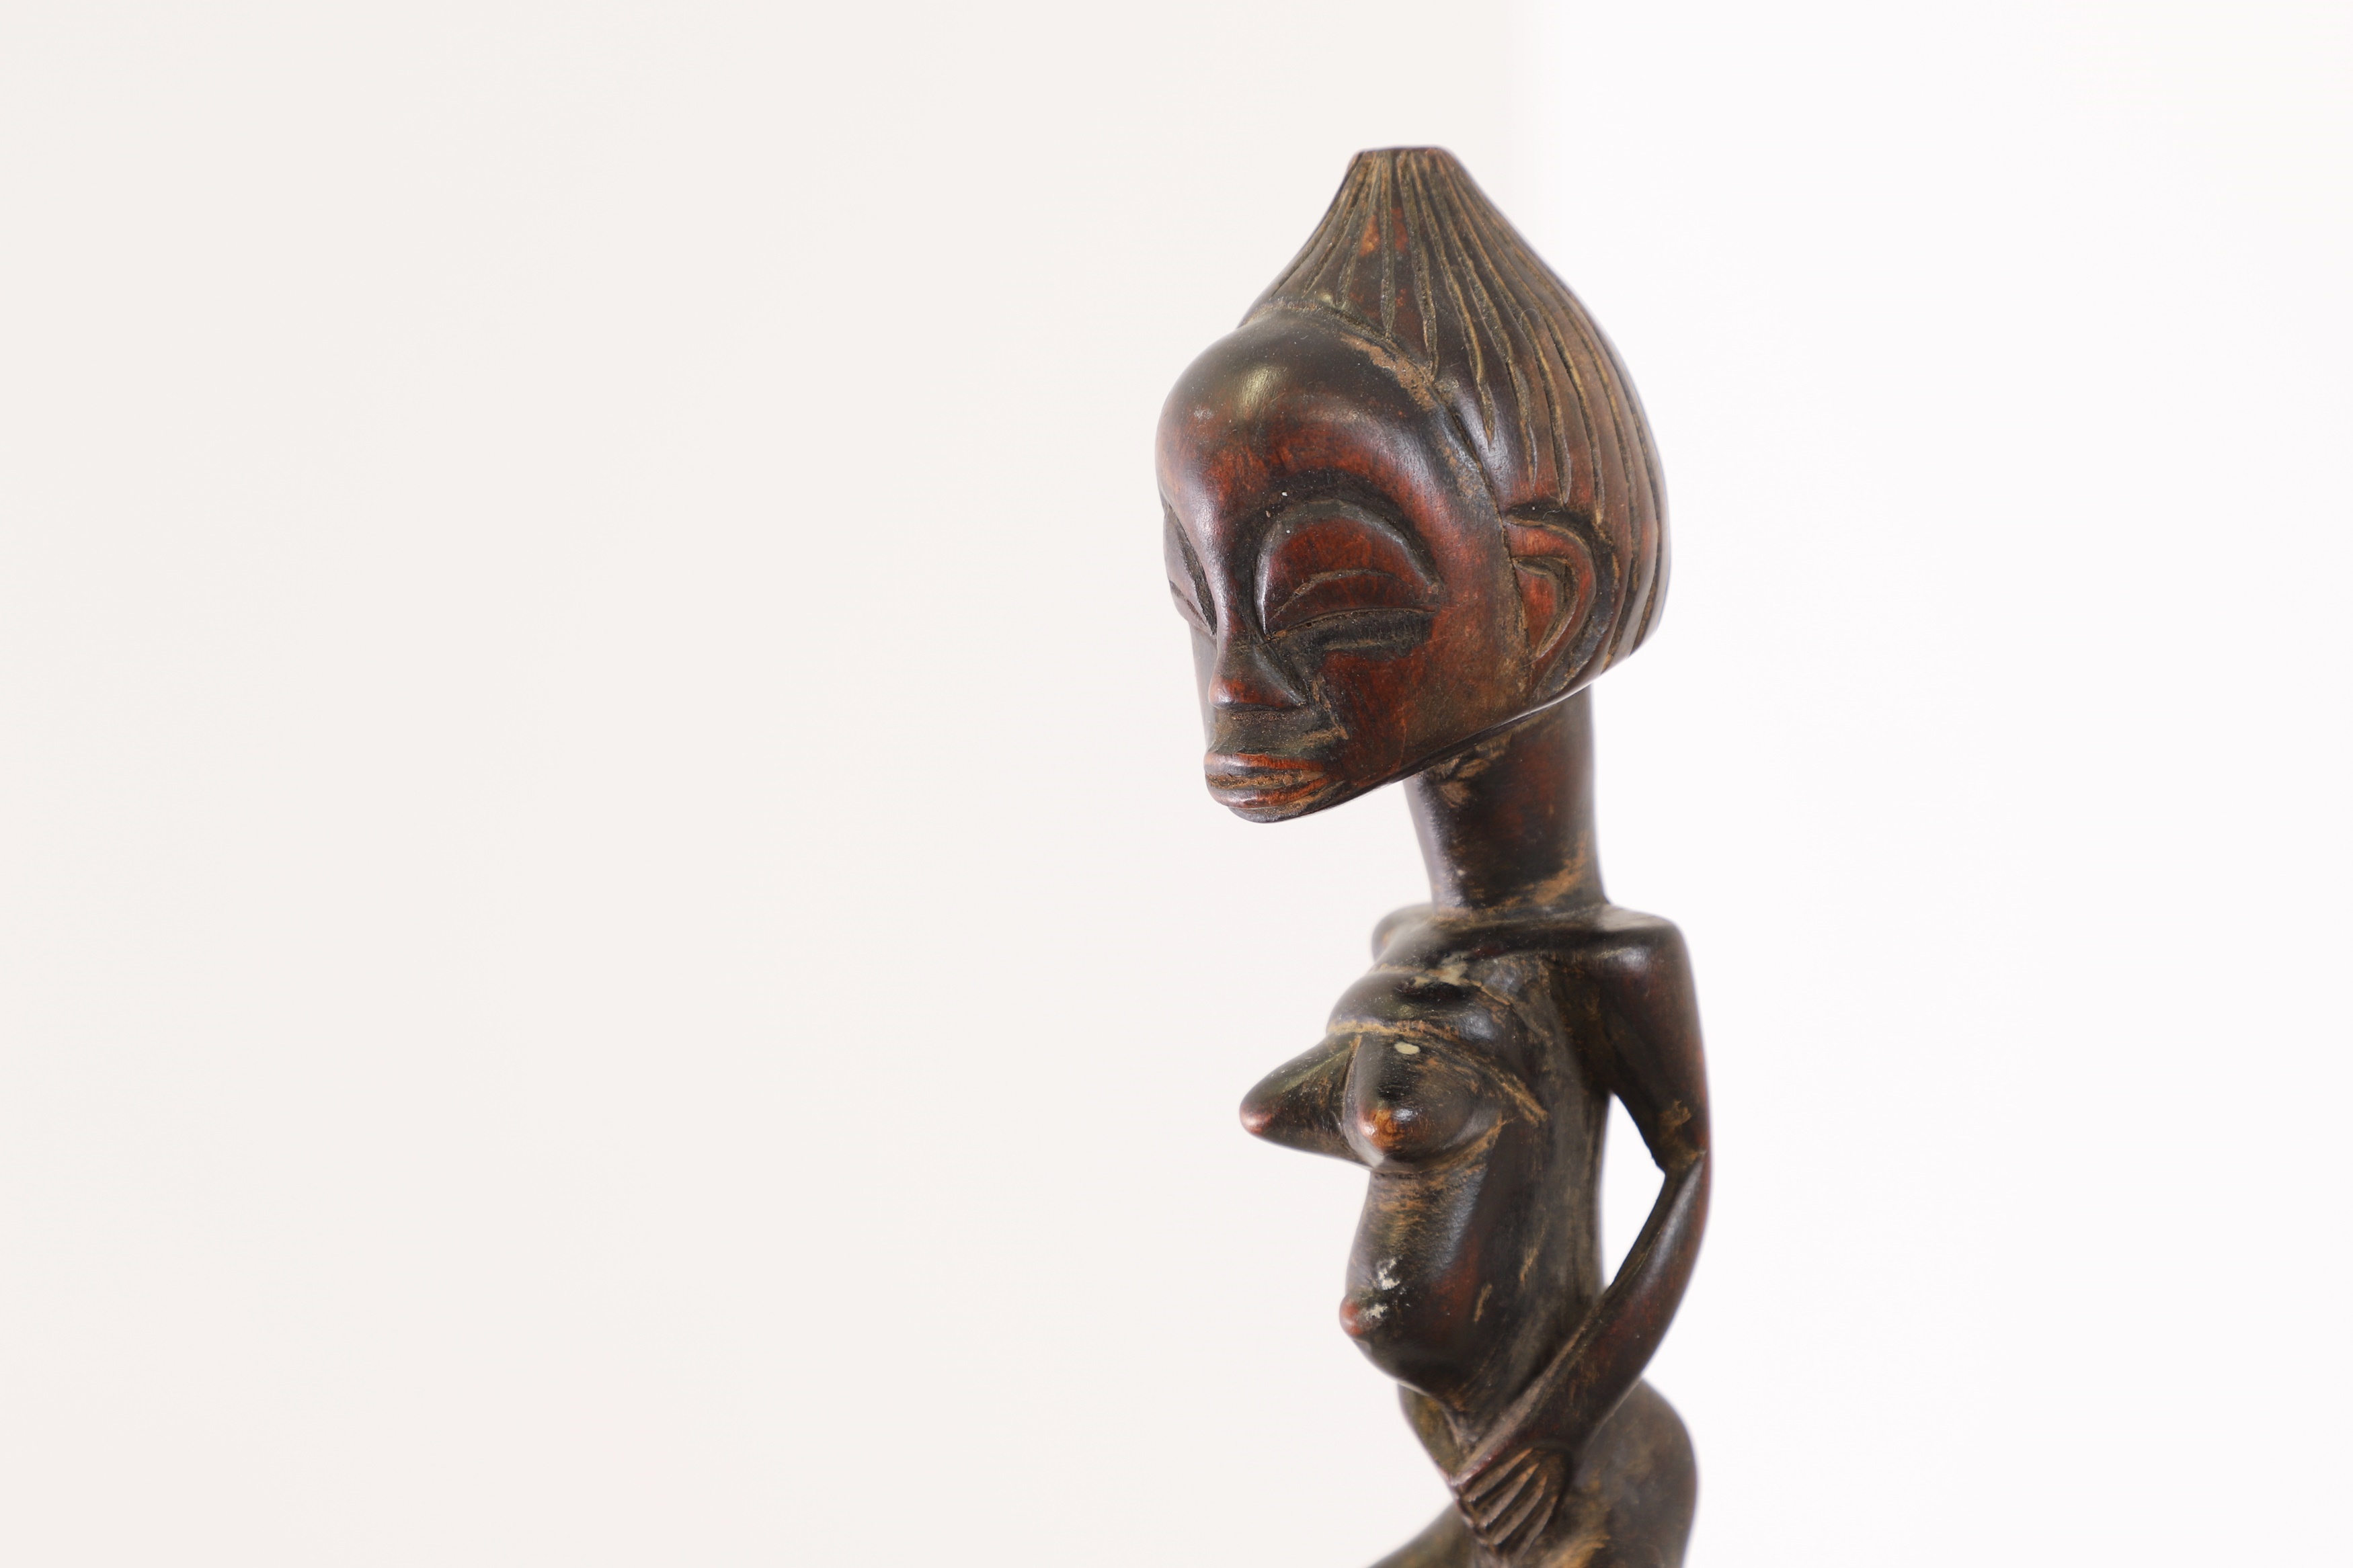 A Luba fertility or divination rattle, 20th century, Democratic Republic of Congo (£200-300)